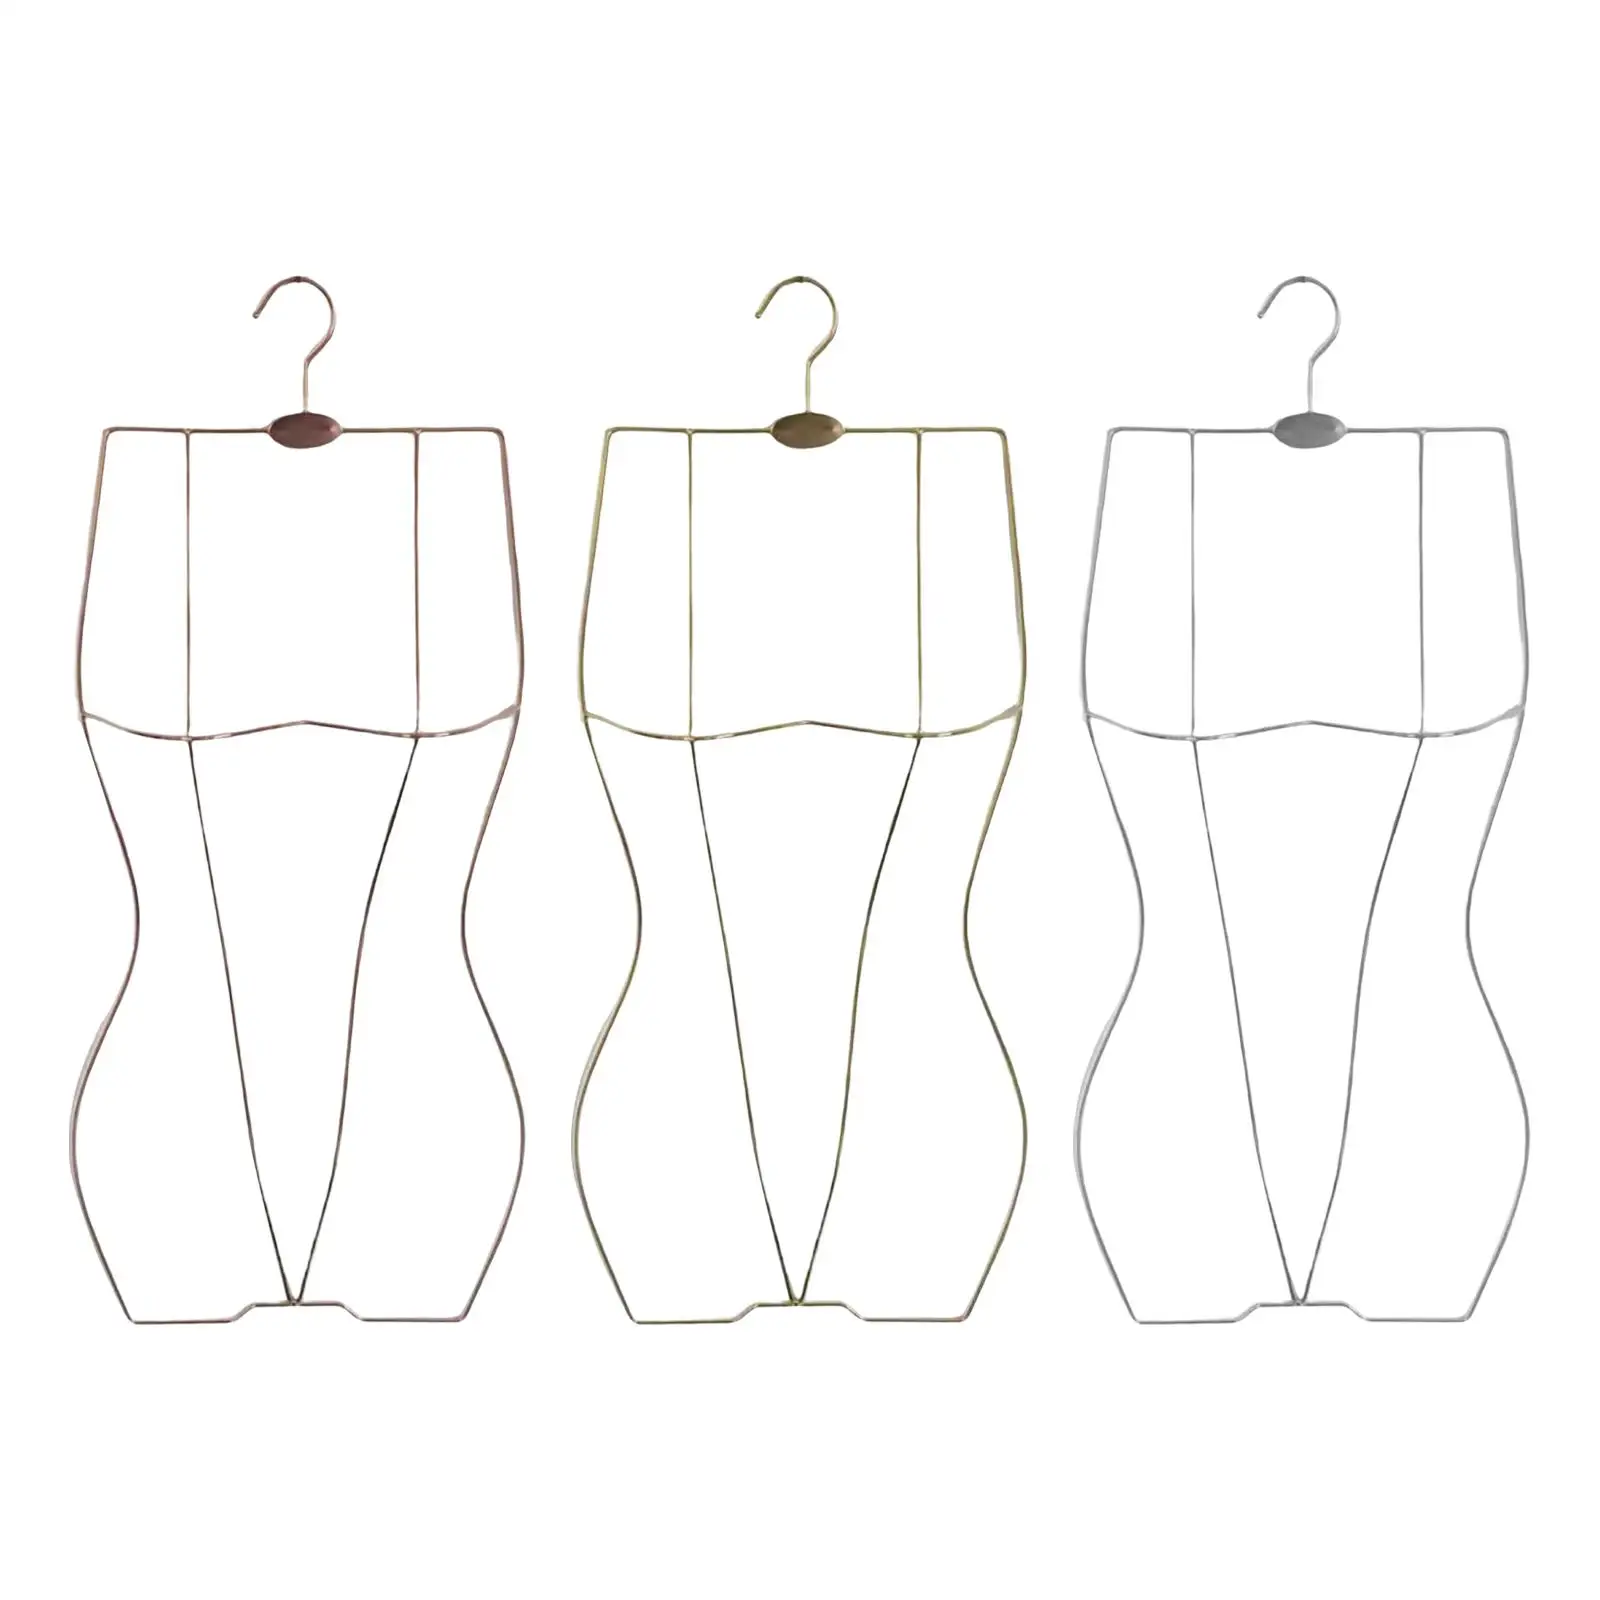 Ladies Wire Body Shape Swimsuit Hanger Wardrobe Organizer Dress Holder Coat Rack Clothes Hanger for Laundry Bedroom Home Closet